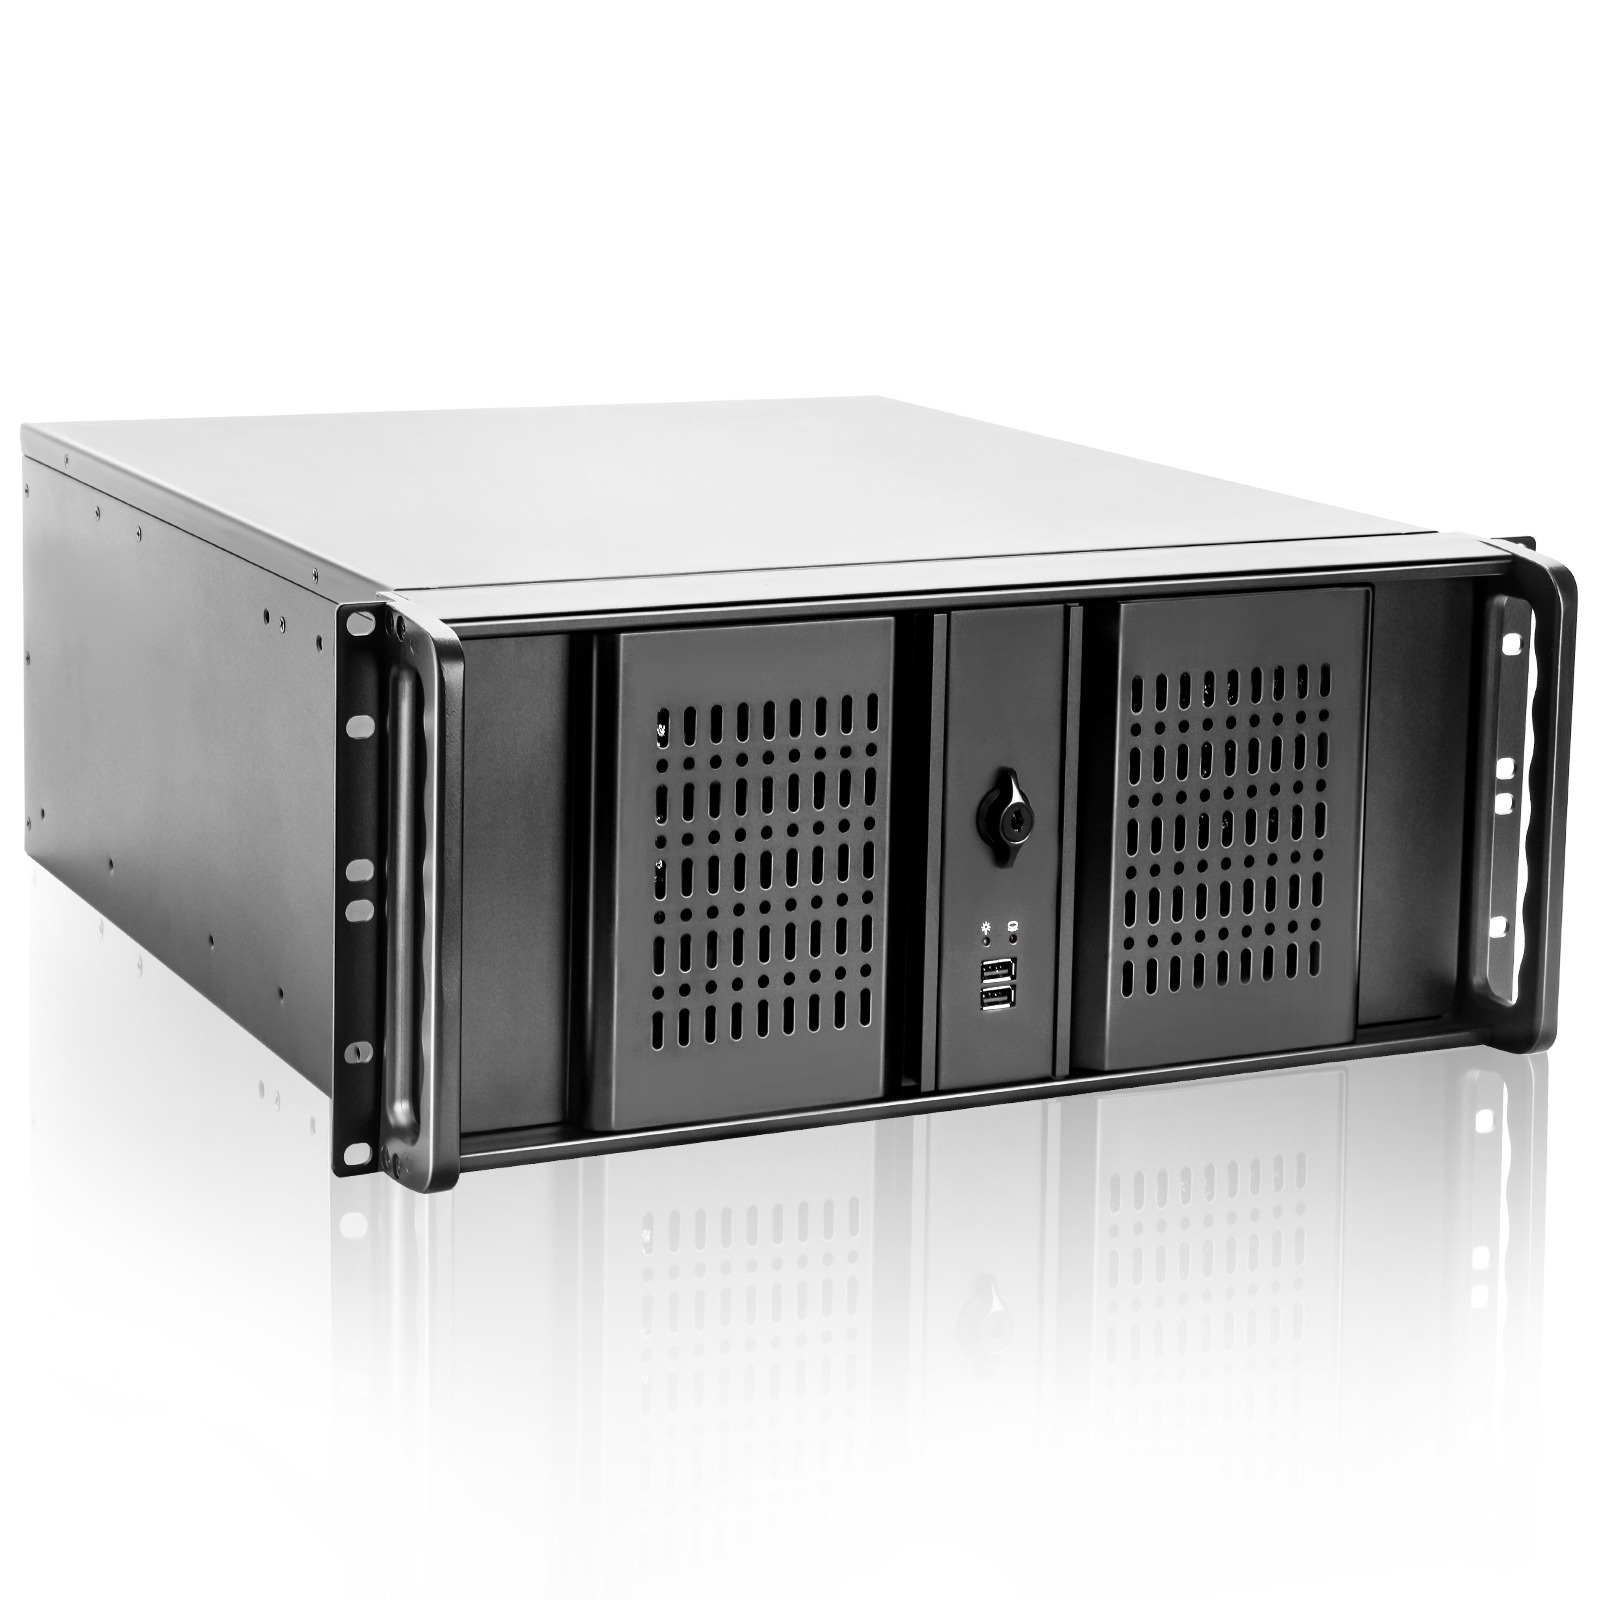 Rackmount chassis Server case 19 inch ATX microATX 4U 6x5.25 two door N400-6 